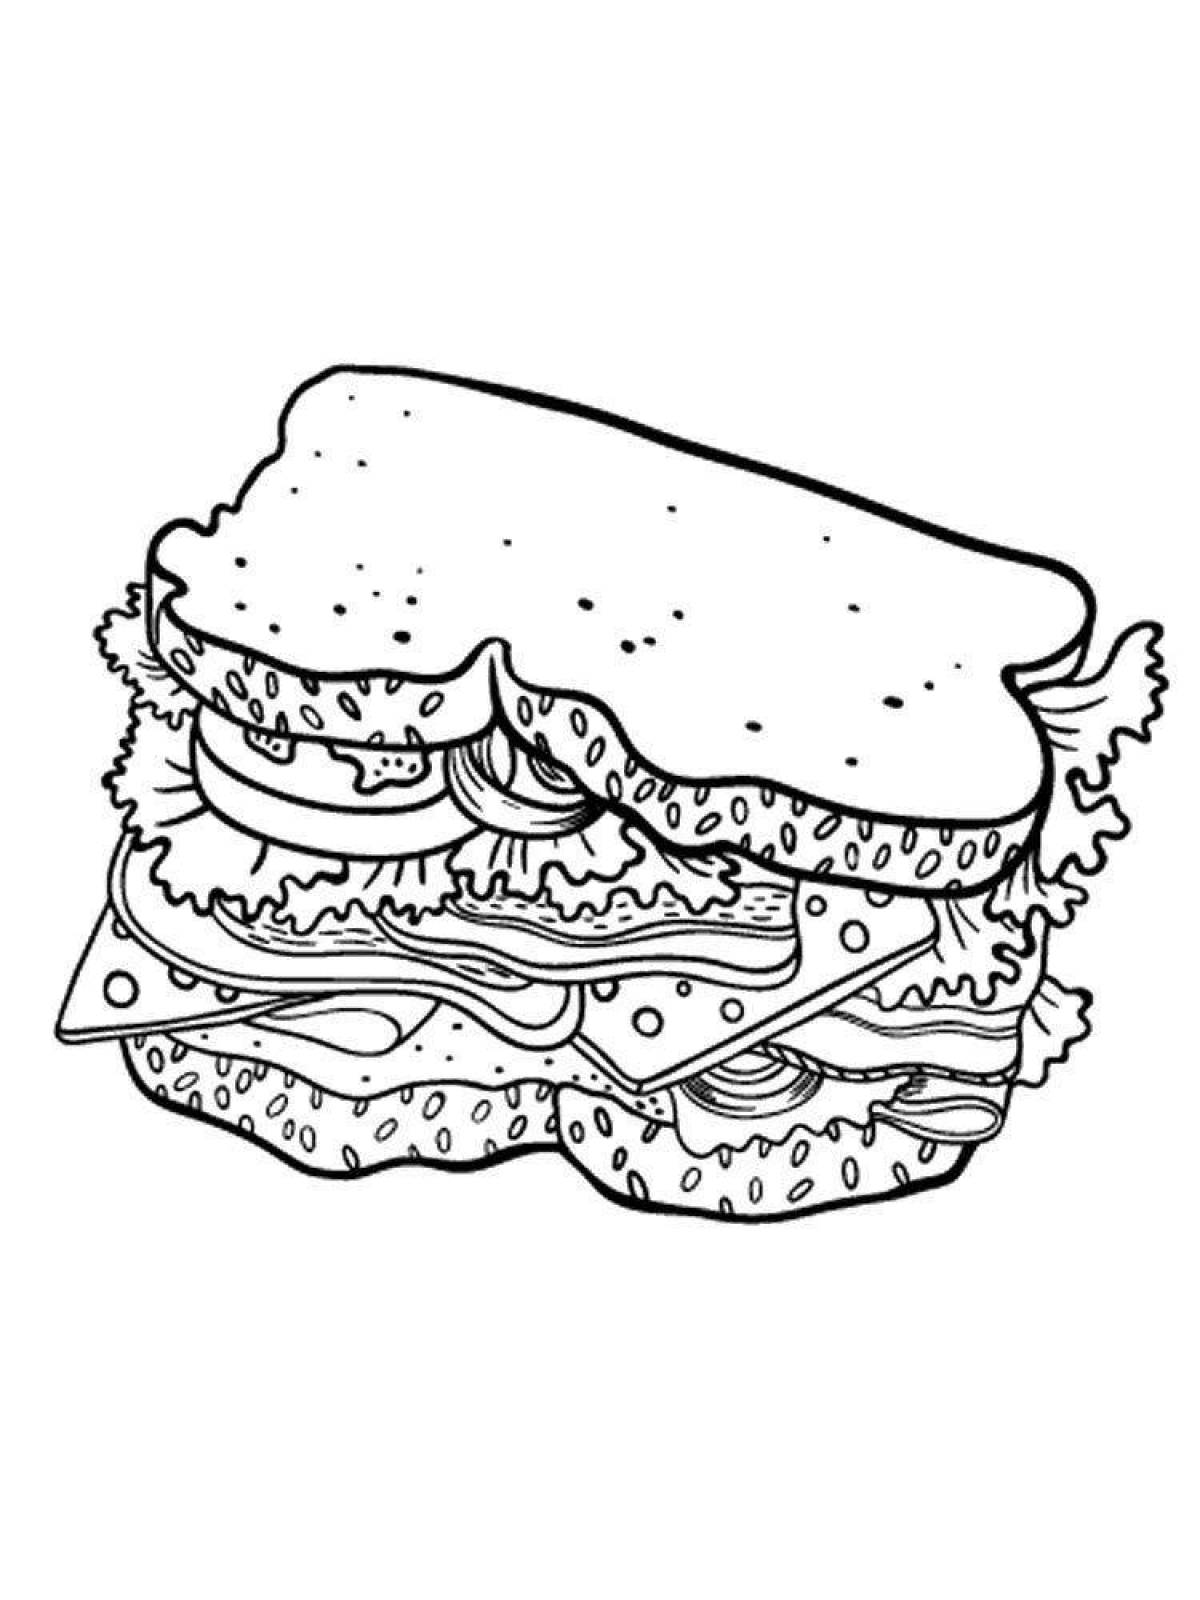 Adorable sandwich coloring page